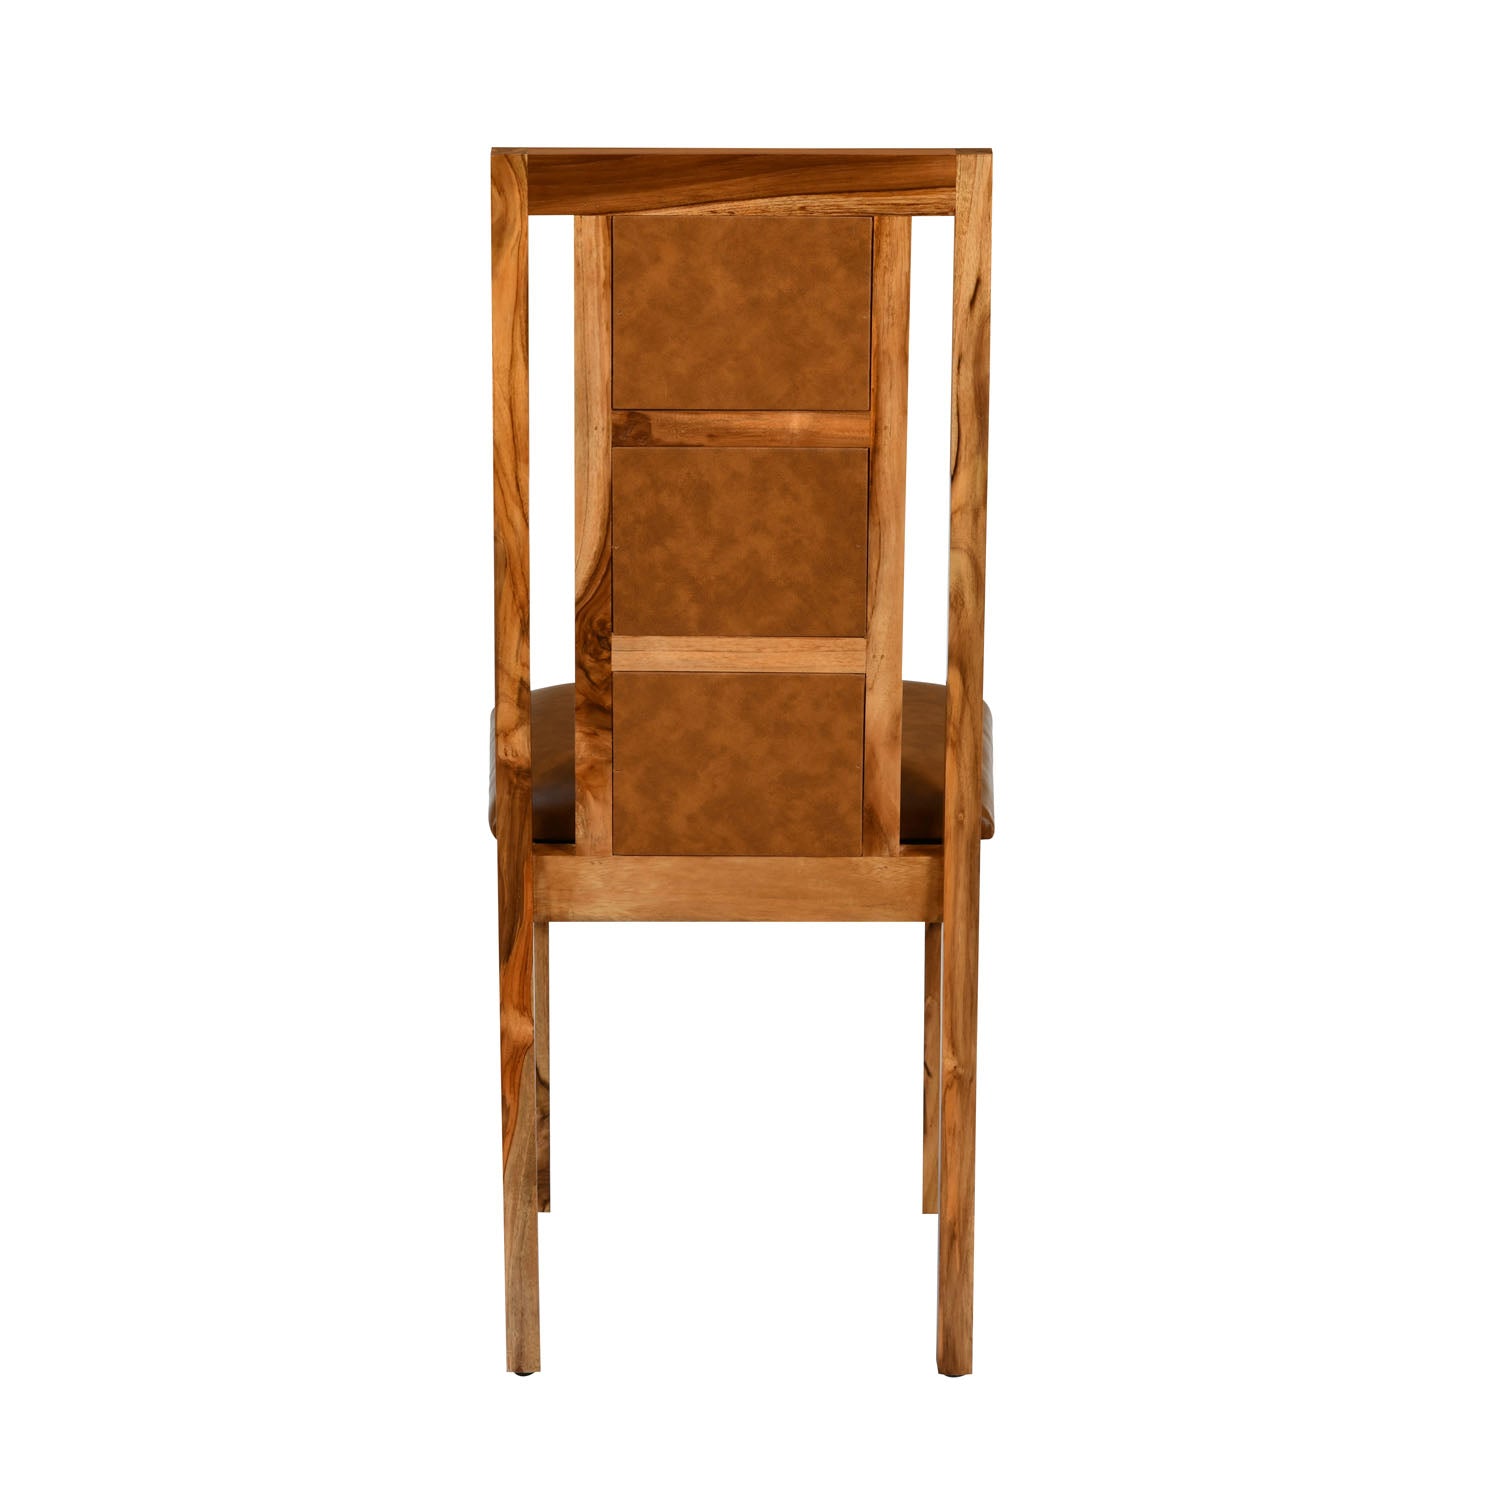 Velika Solid Wood Dining Chair (Honey Brown)